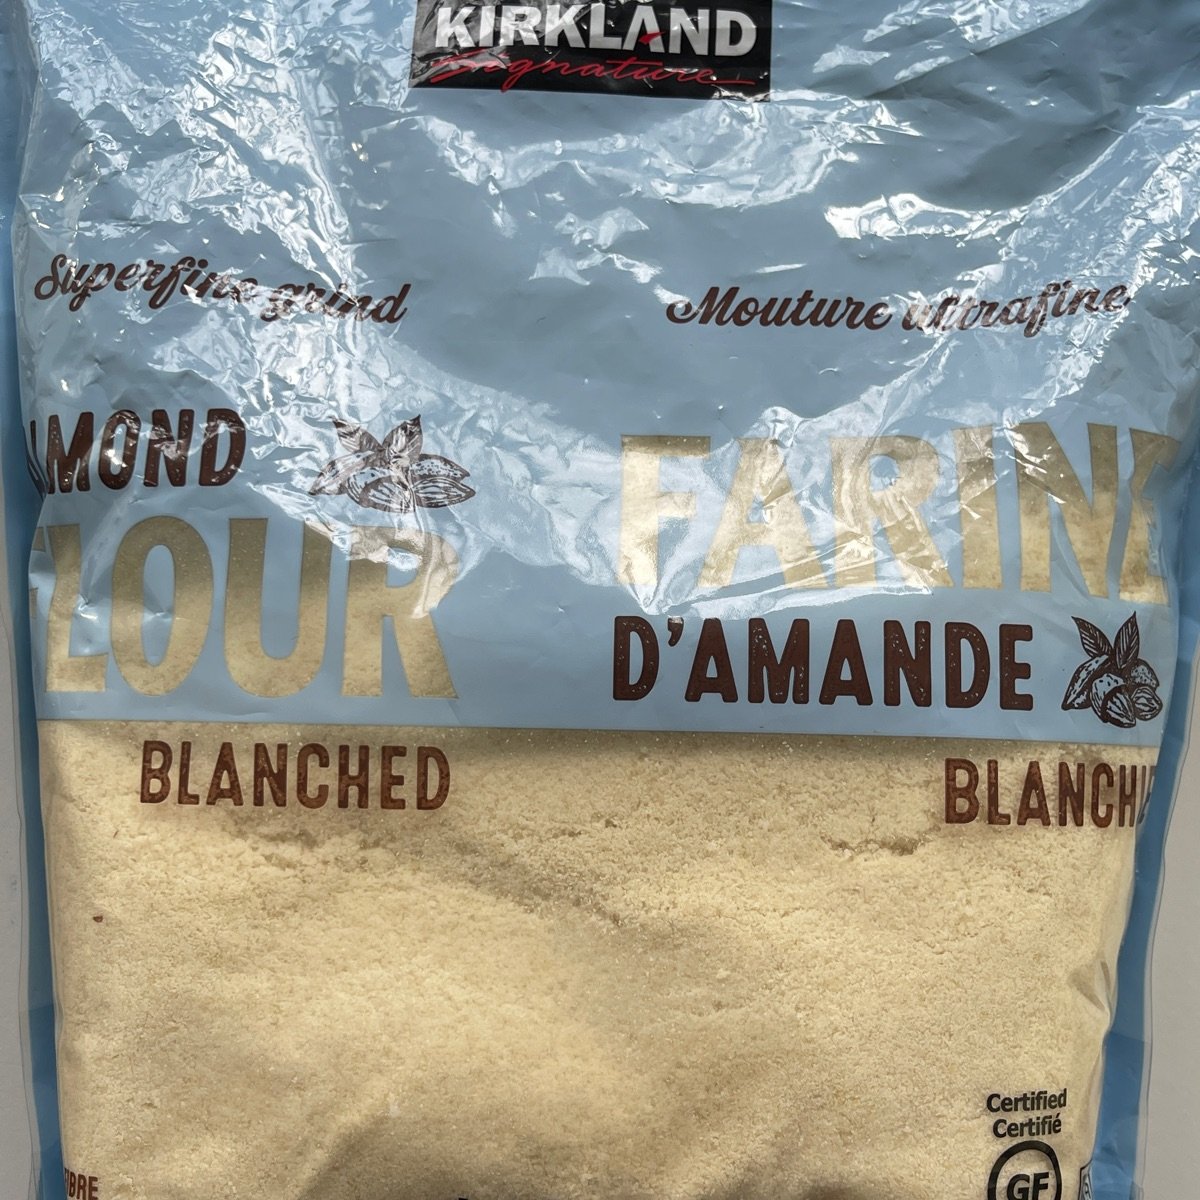 Kirkland Signature Almond Flour Blanched Review